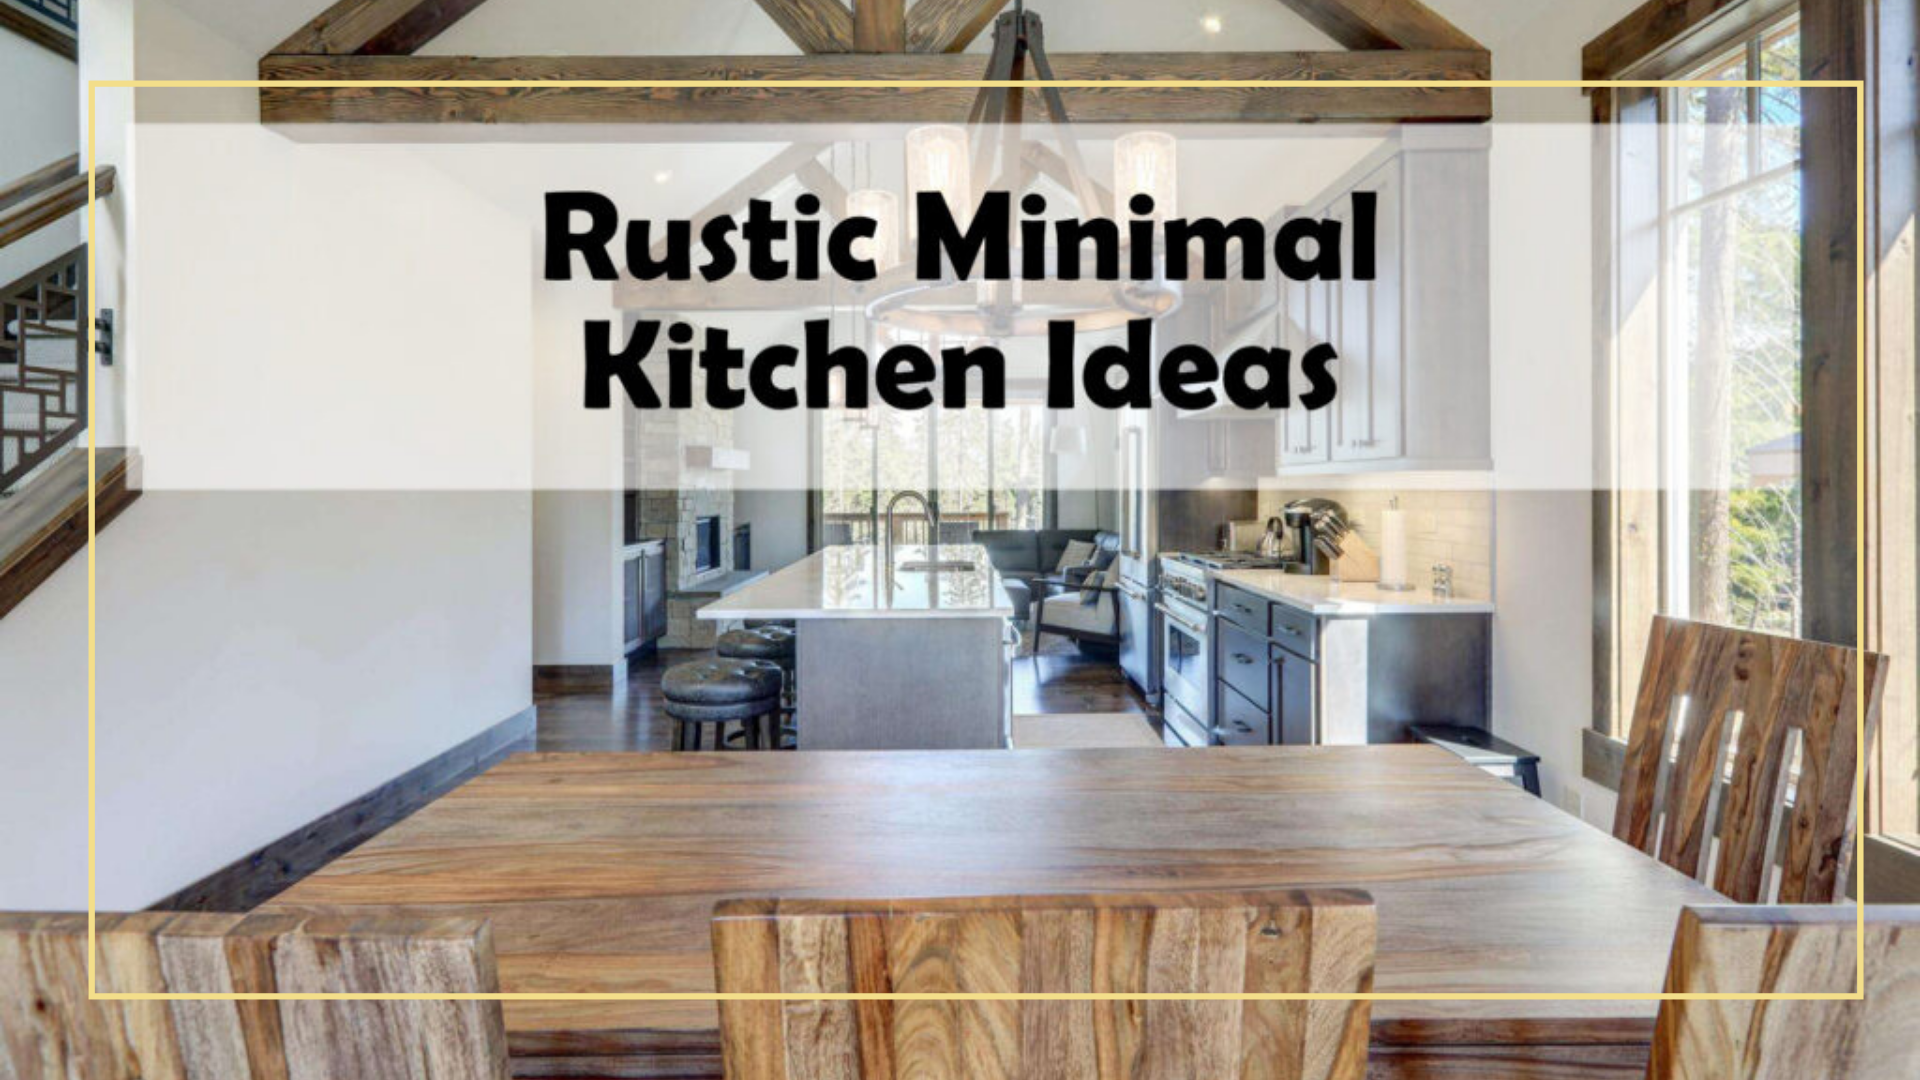 Rustic minimal kitchen ideas